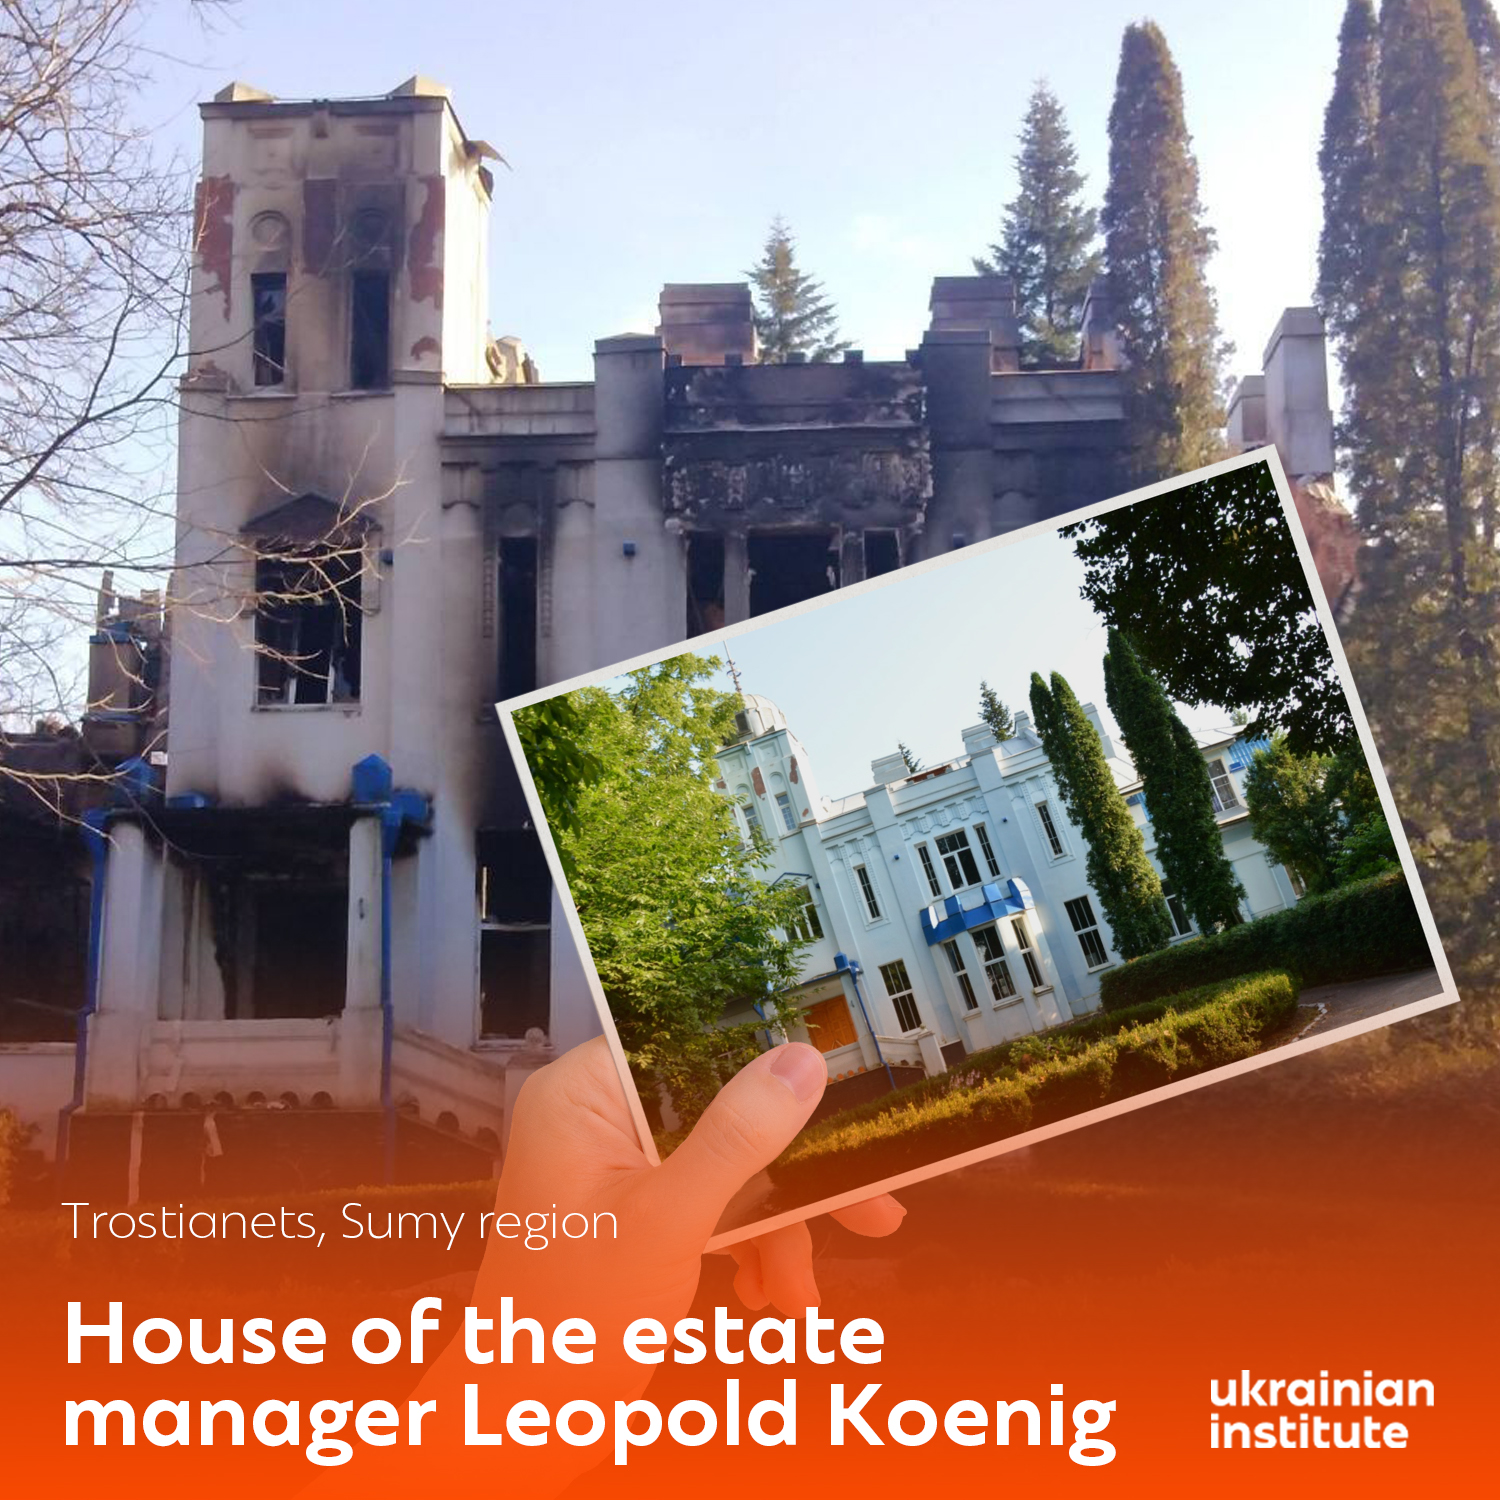 postcard_from_Ukraine_House_of_the_estate_manager_Leopold_Koenig